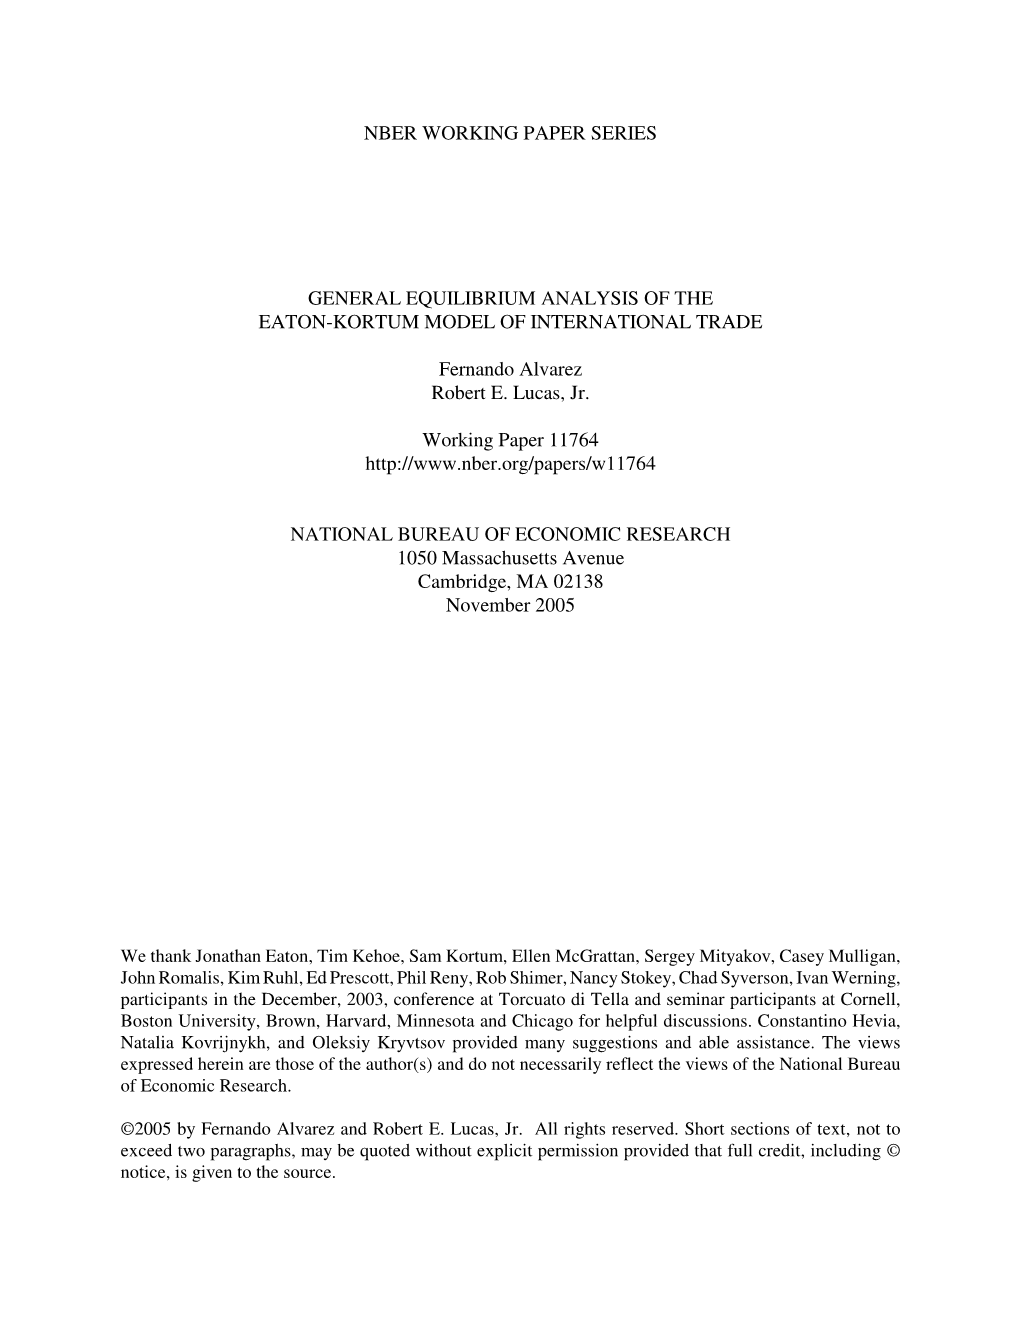 NBER WORKING PAPER SERIES GENERAL EQUILIBRIUM ANALYSIS of the EATON-KORTUM MODEL of INTERNATIONAL TRADE Fernando Alvarez Robert